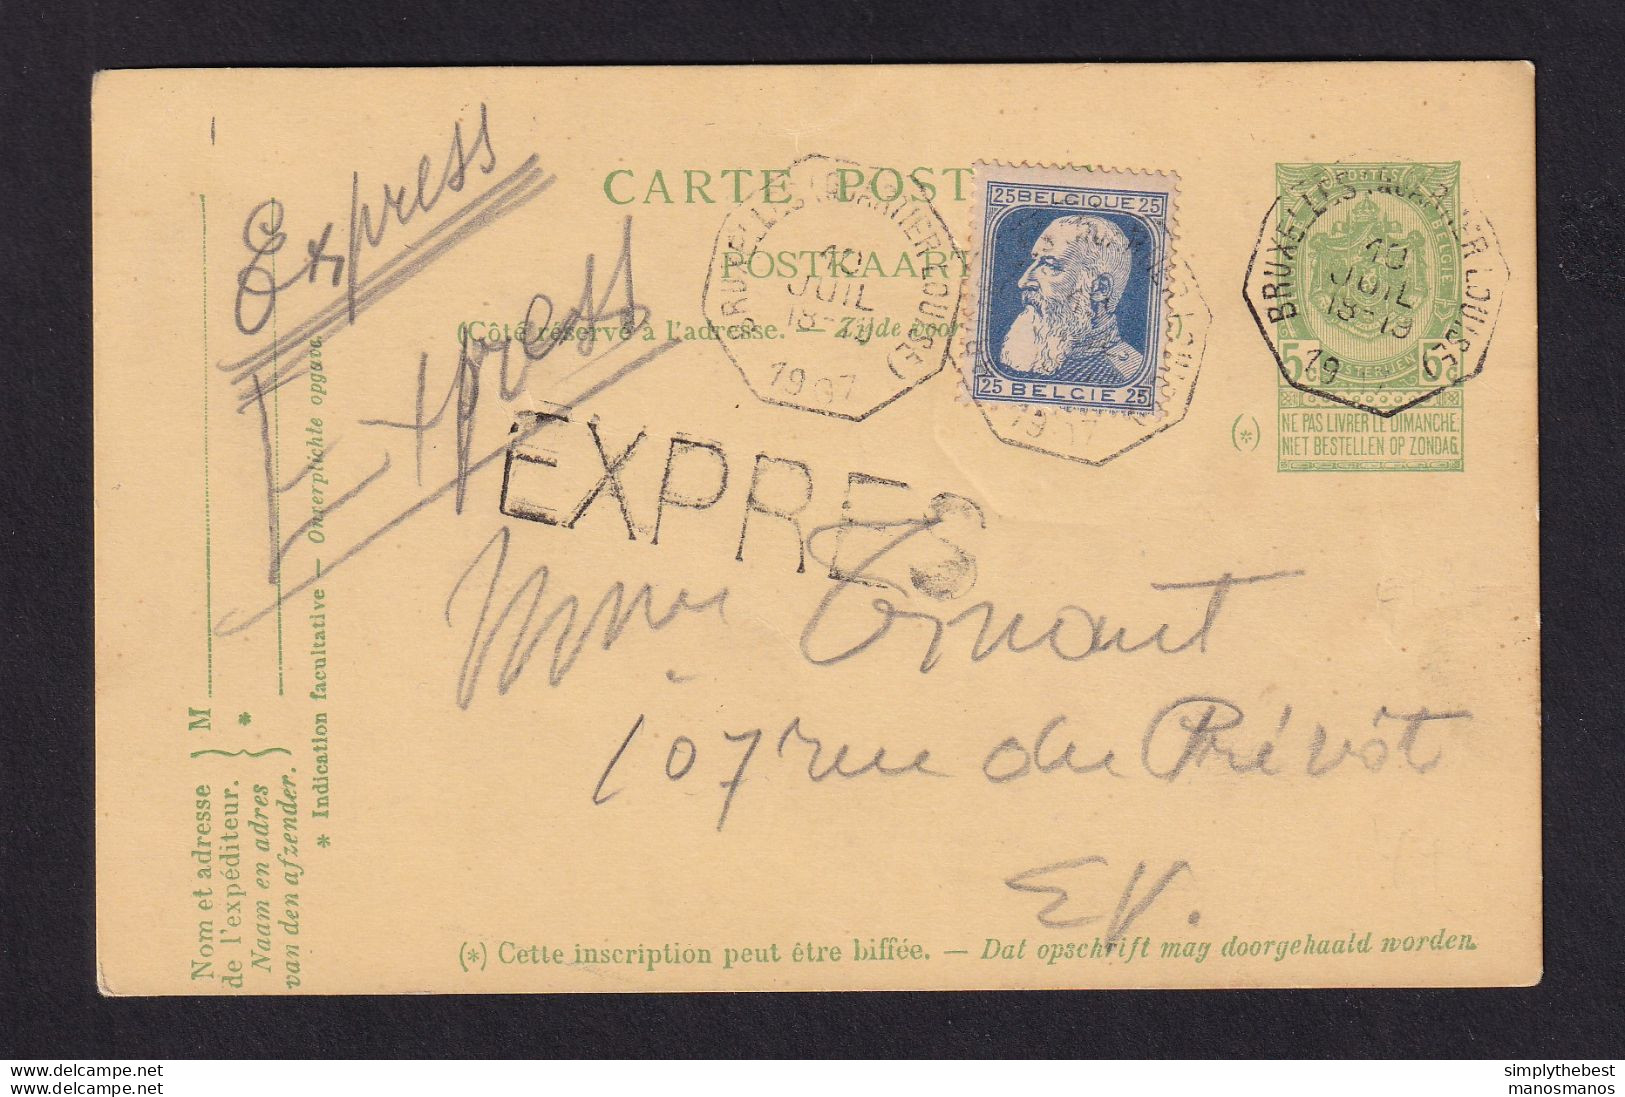 DDAA 735 -- Enveloppe Postal + TP Grosse Barbe En EXPRES - Télégraphique BXL Quartier Louise 1907 En Ville - Postkarten 1871-1909